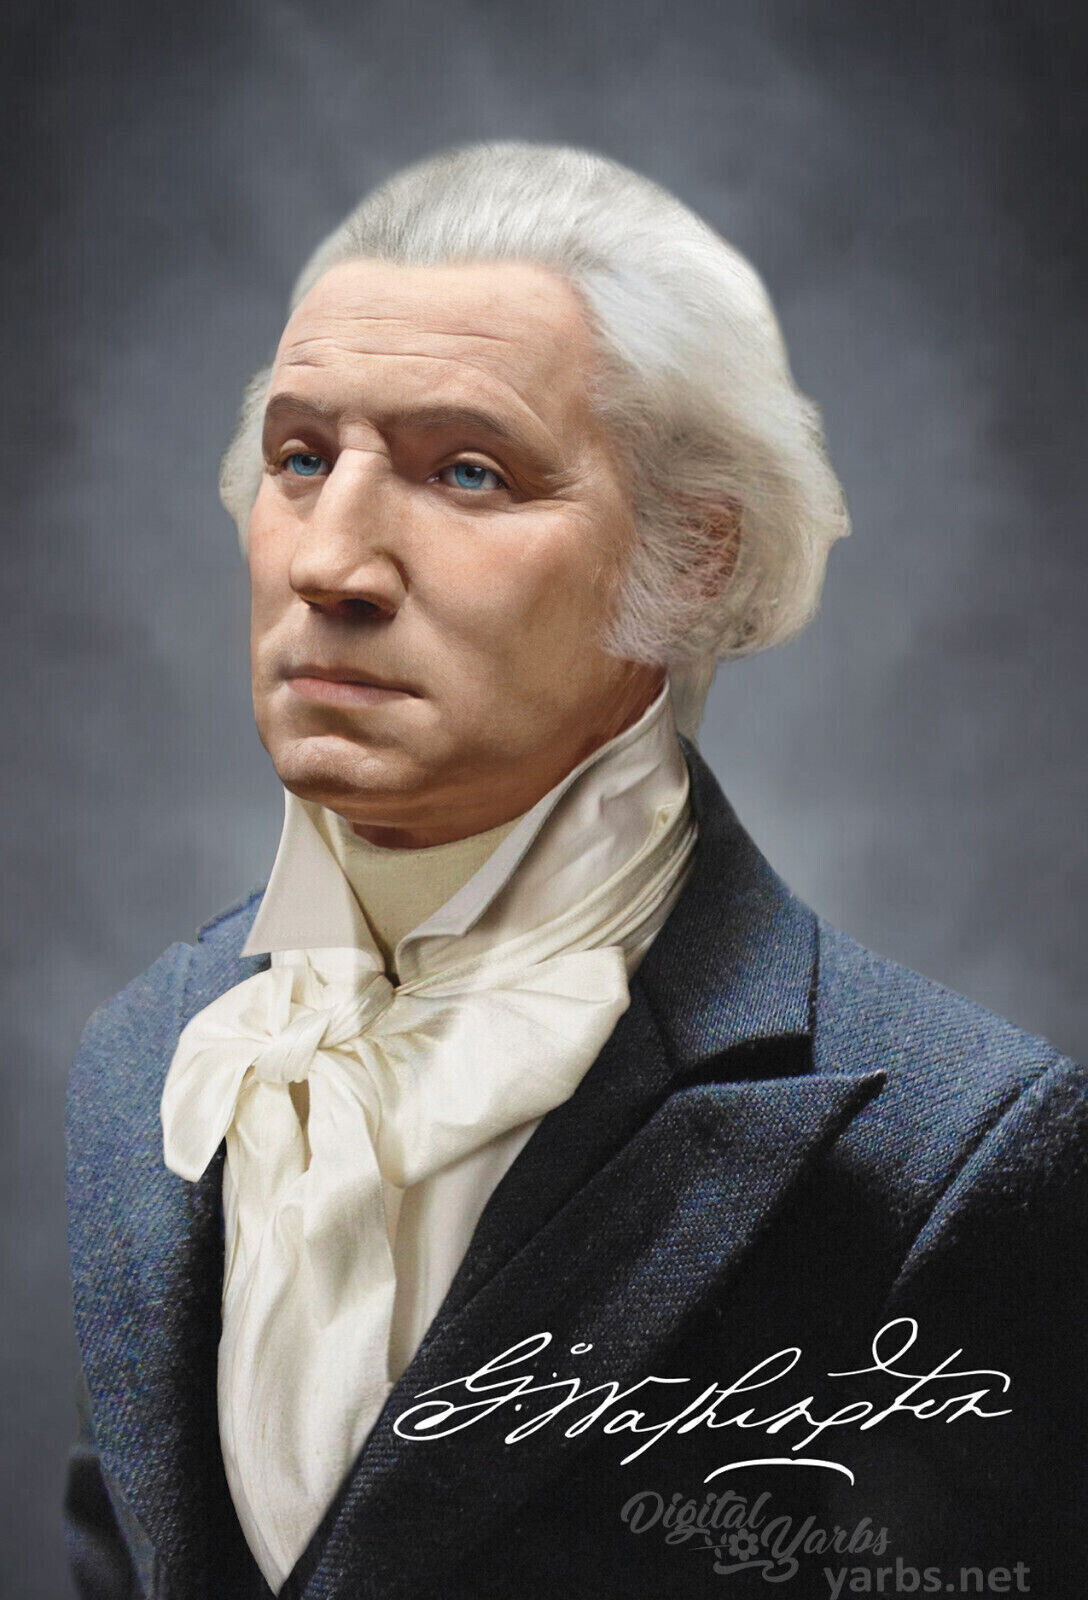 The Real Face of George Washington Houdon Life Mask NEW 2022 Image Postcard